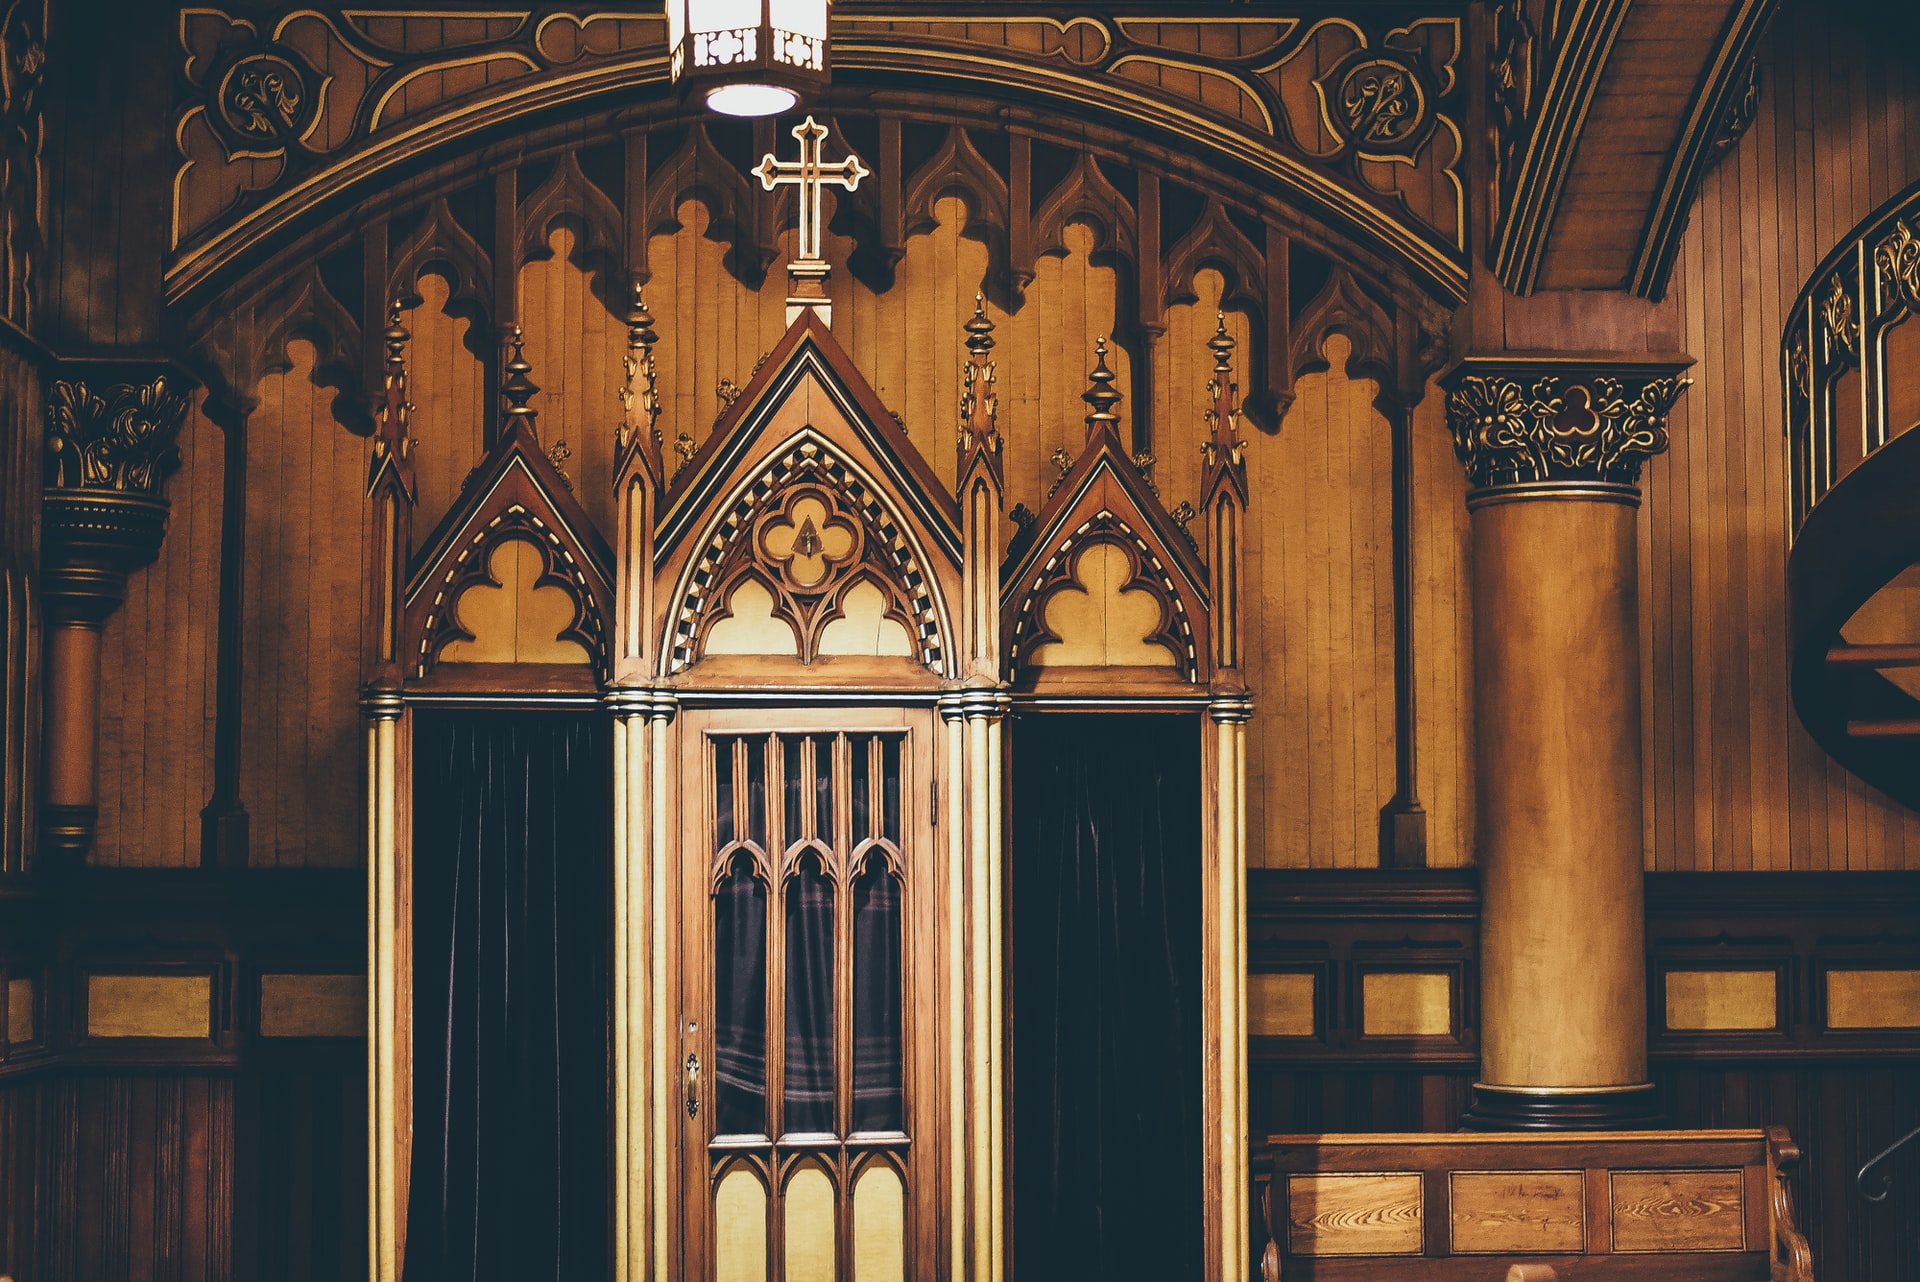 A confessional at a church